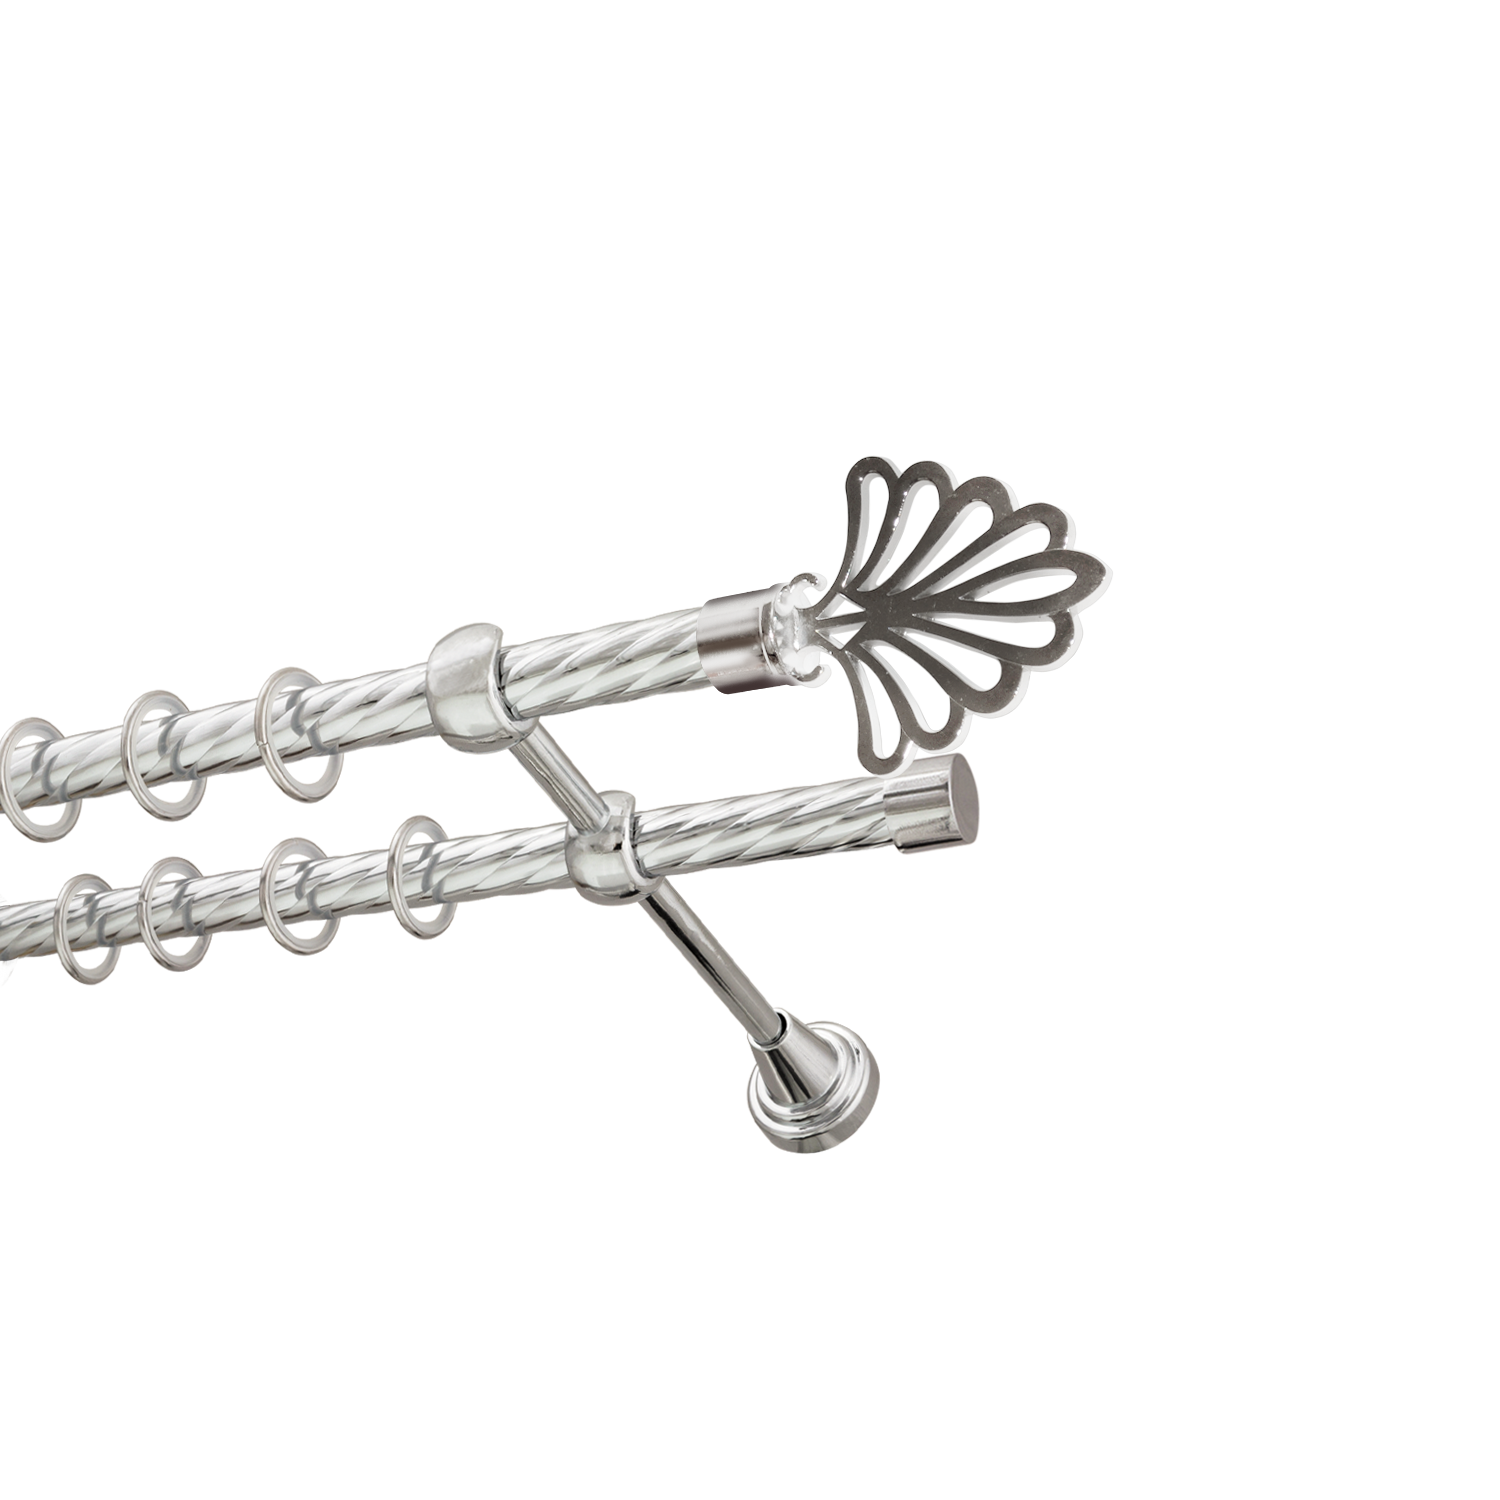 Металлический карниз для штор Бутик, двухрядный 16/16 мм, серебро, витая штанга, длина 180 см - фото Wikidecor.ru